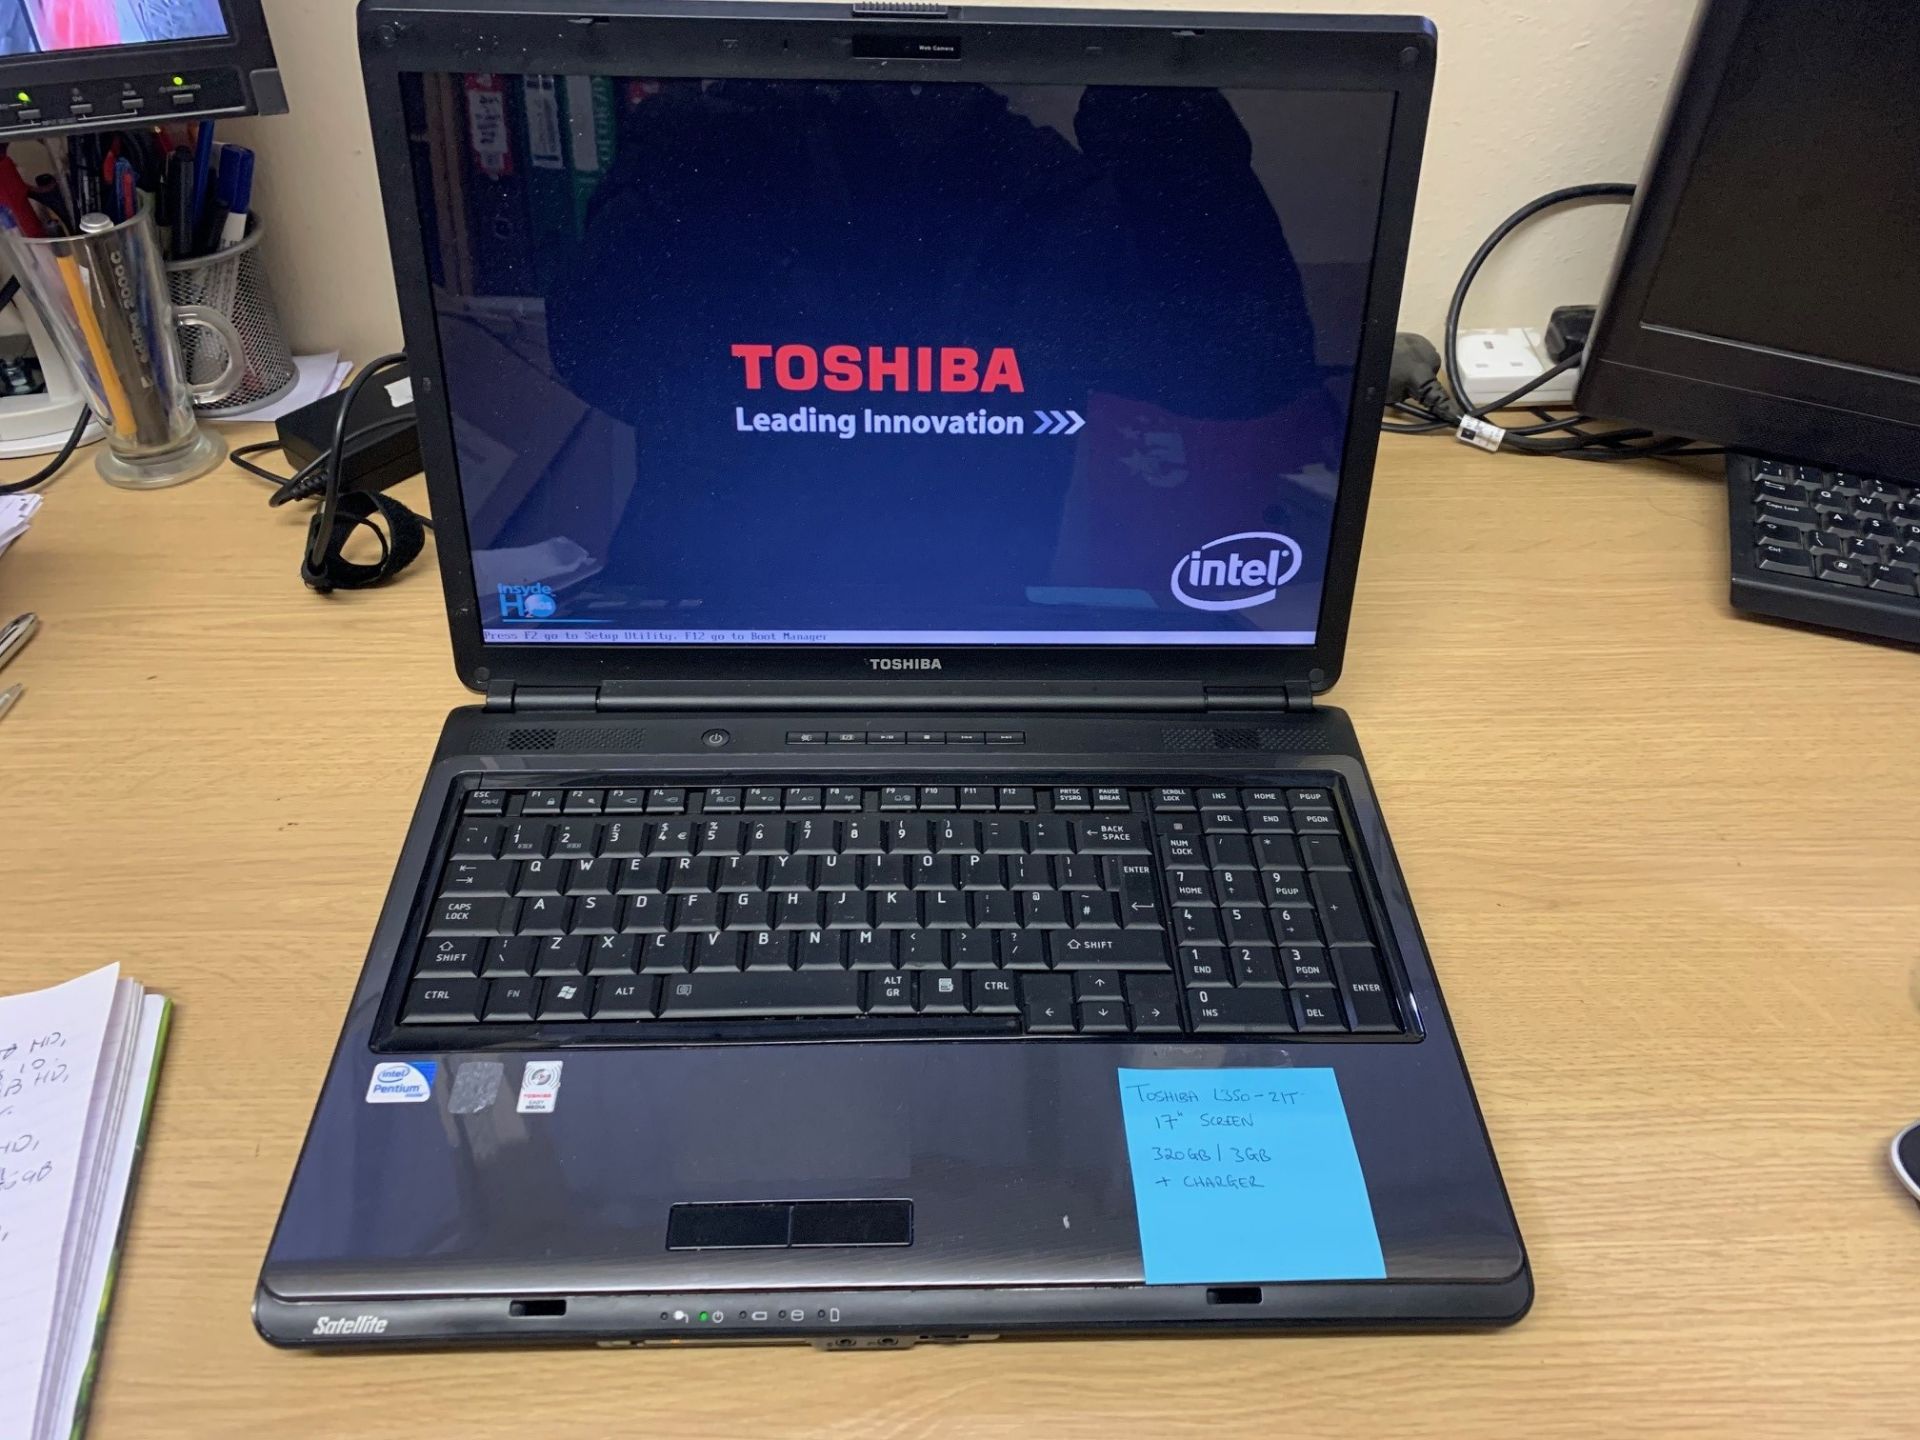 Toshiba L350-21T Laptop - 320GB Hard Drive, 3GB RAM, 17" Screen, Windows 7 & Charger - Image 2 of 4